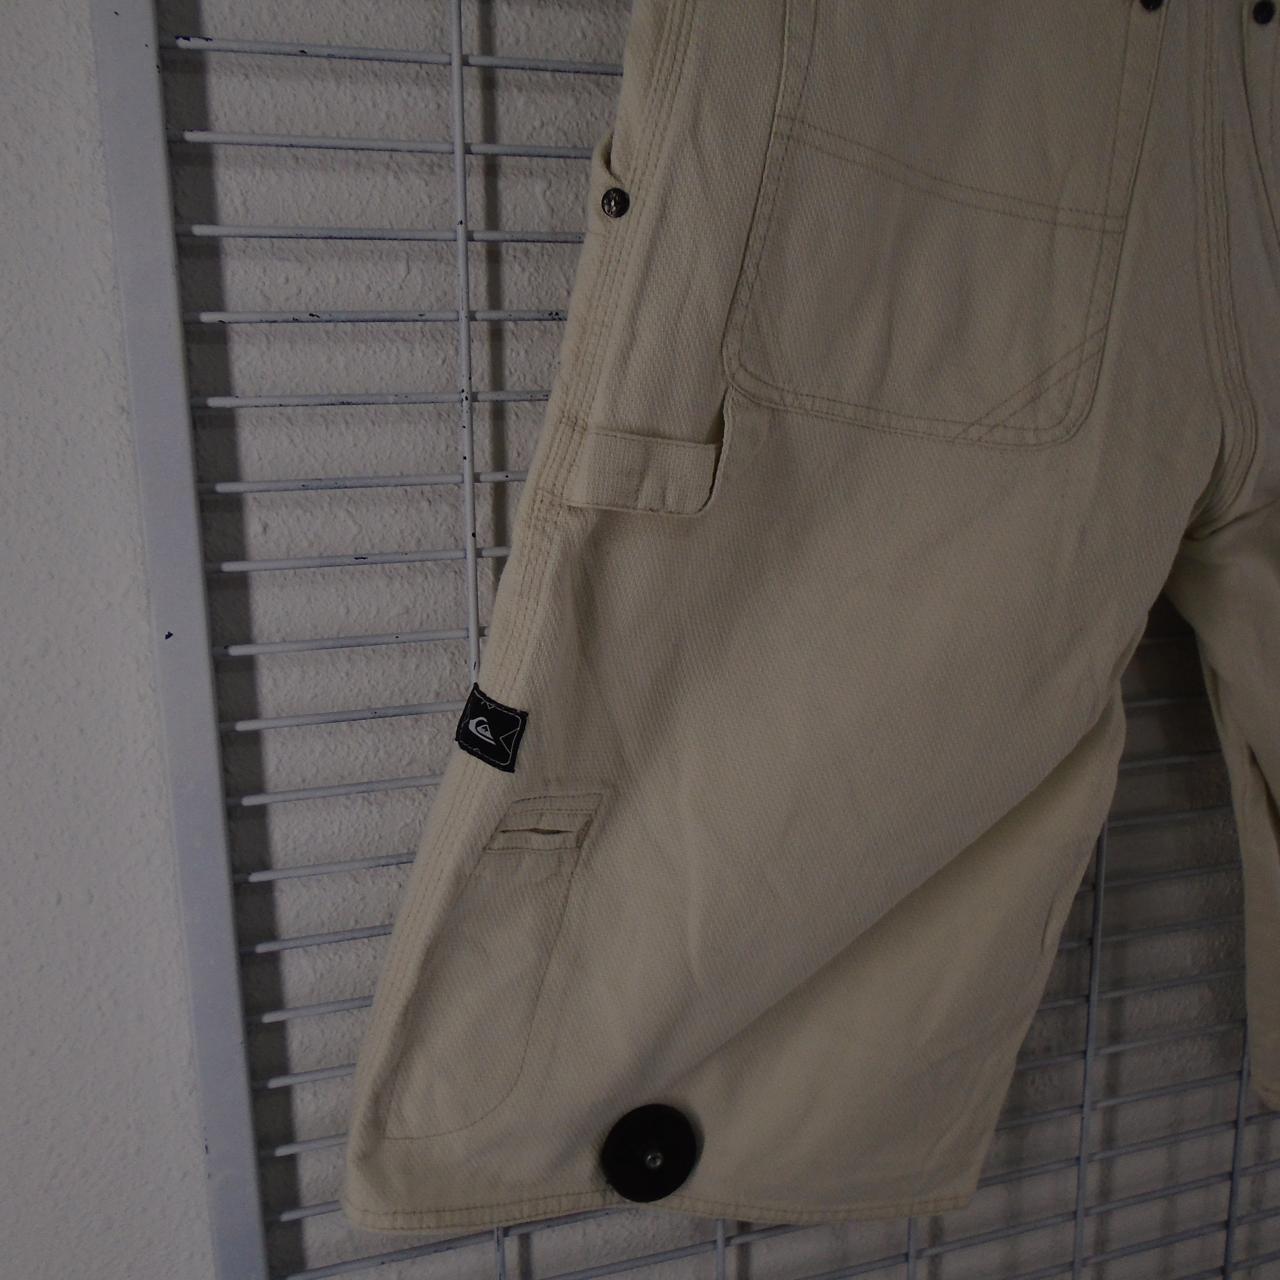 Men's Shorts Quiksilver . Beige. L. Used. Good